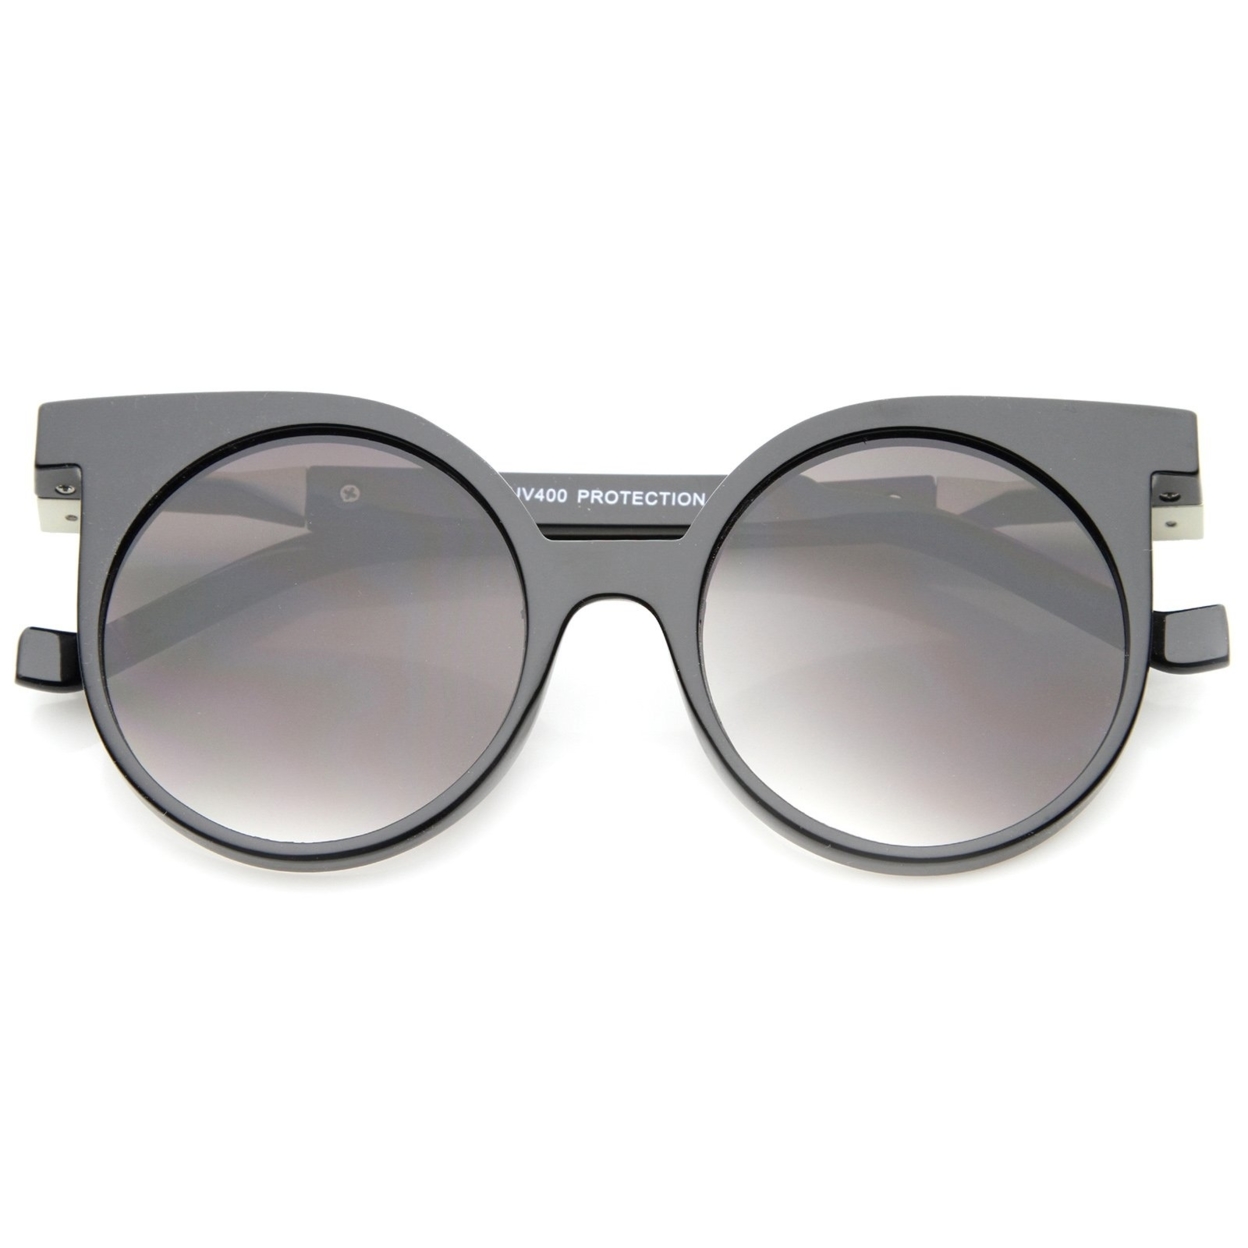 Modern Horn Rimmed Neutral-Colored Flat Lens Round Sunglasses 50mm - Shiny Black / Smoke